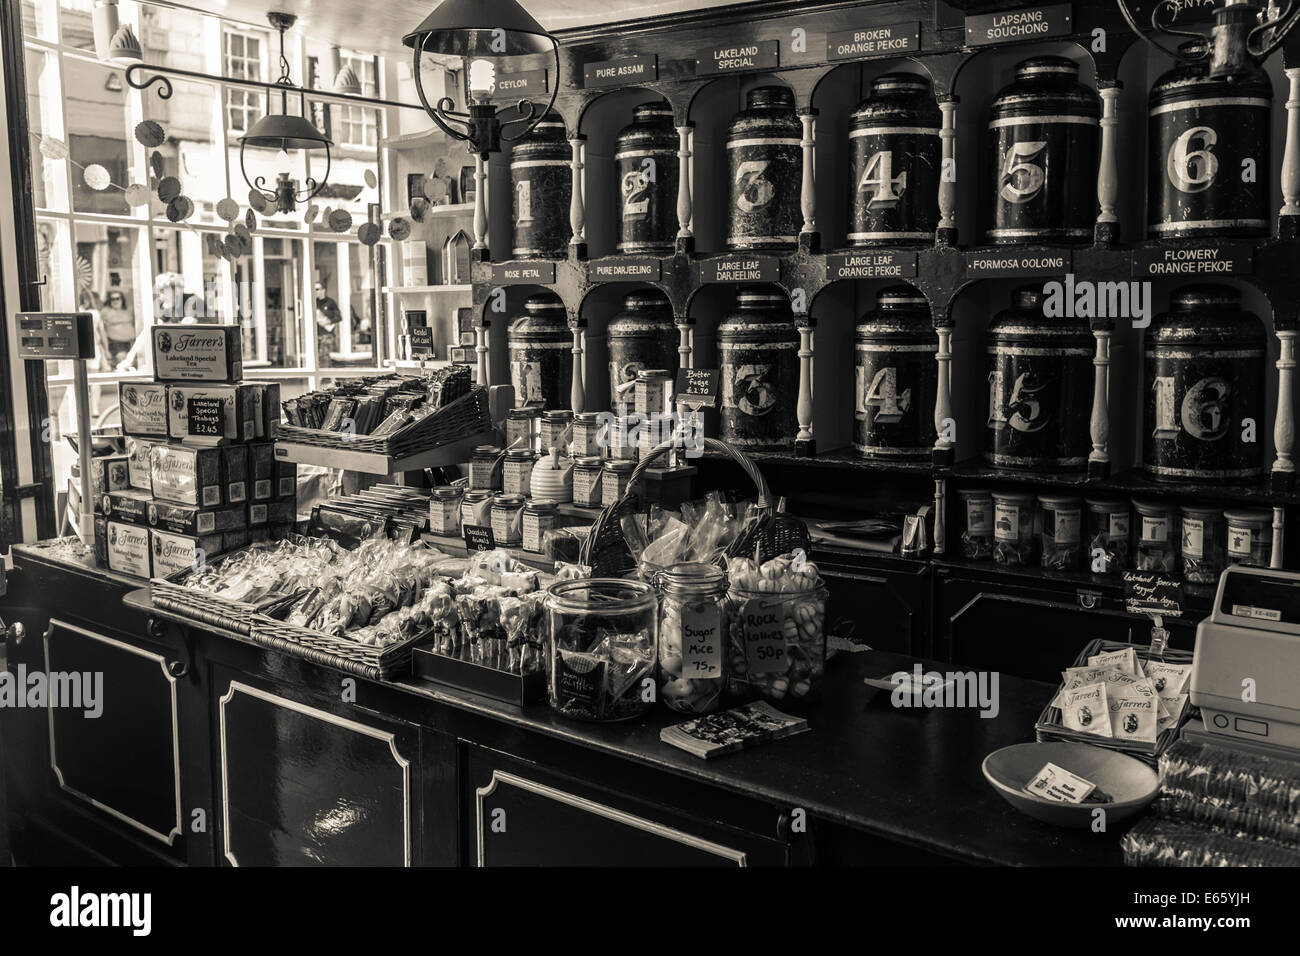 Inside an Old Coffee Shop  Stock Photo 72660857 Alamy